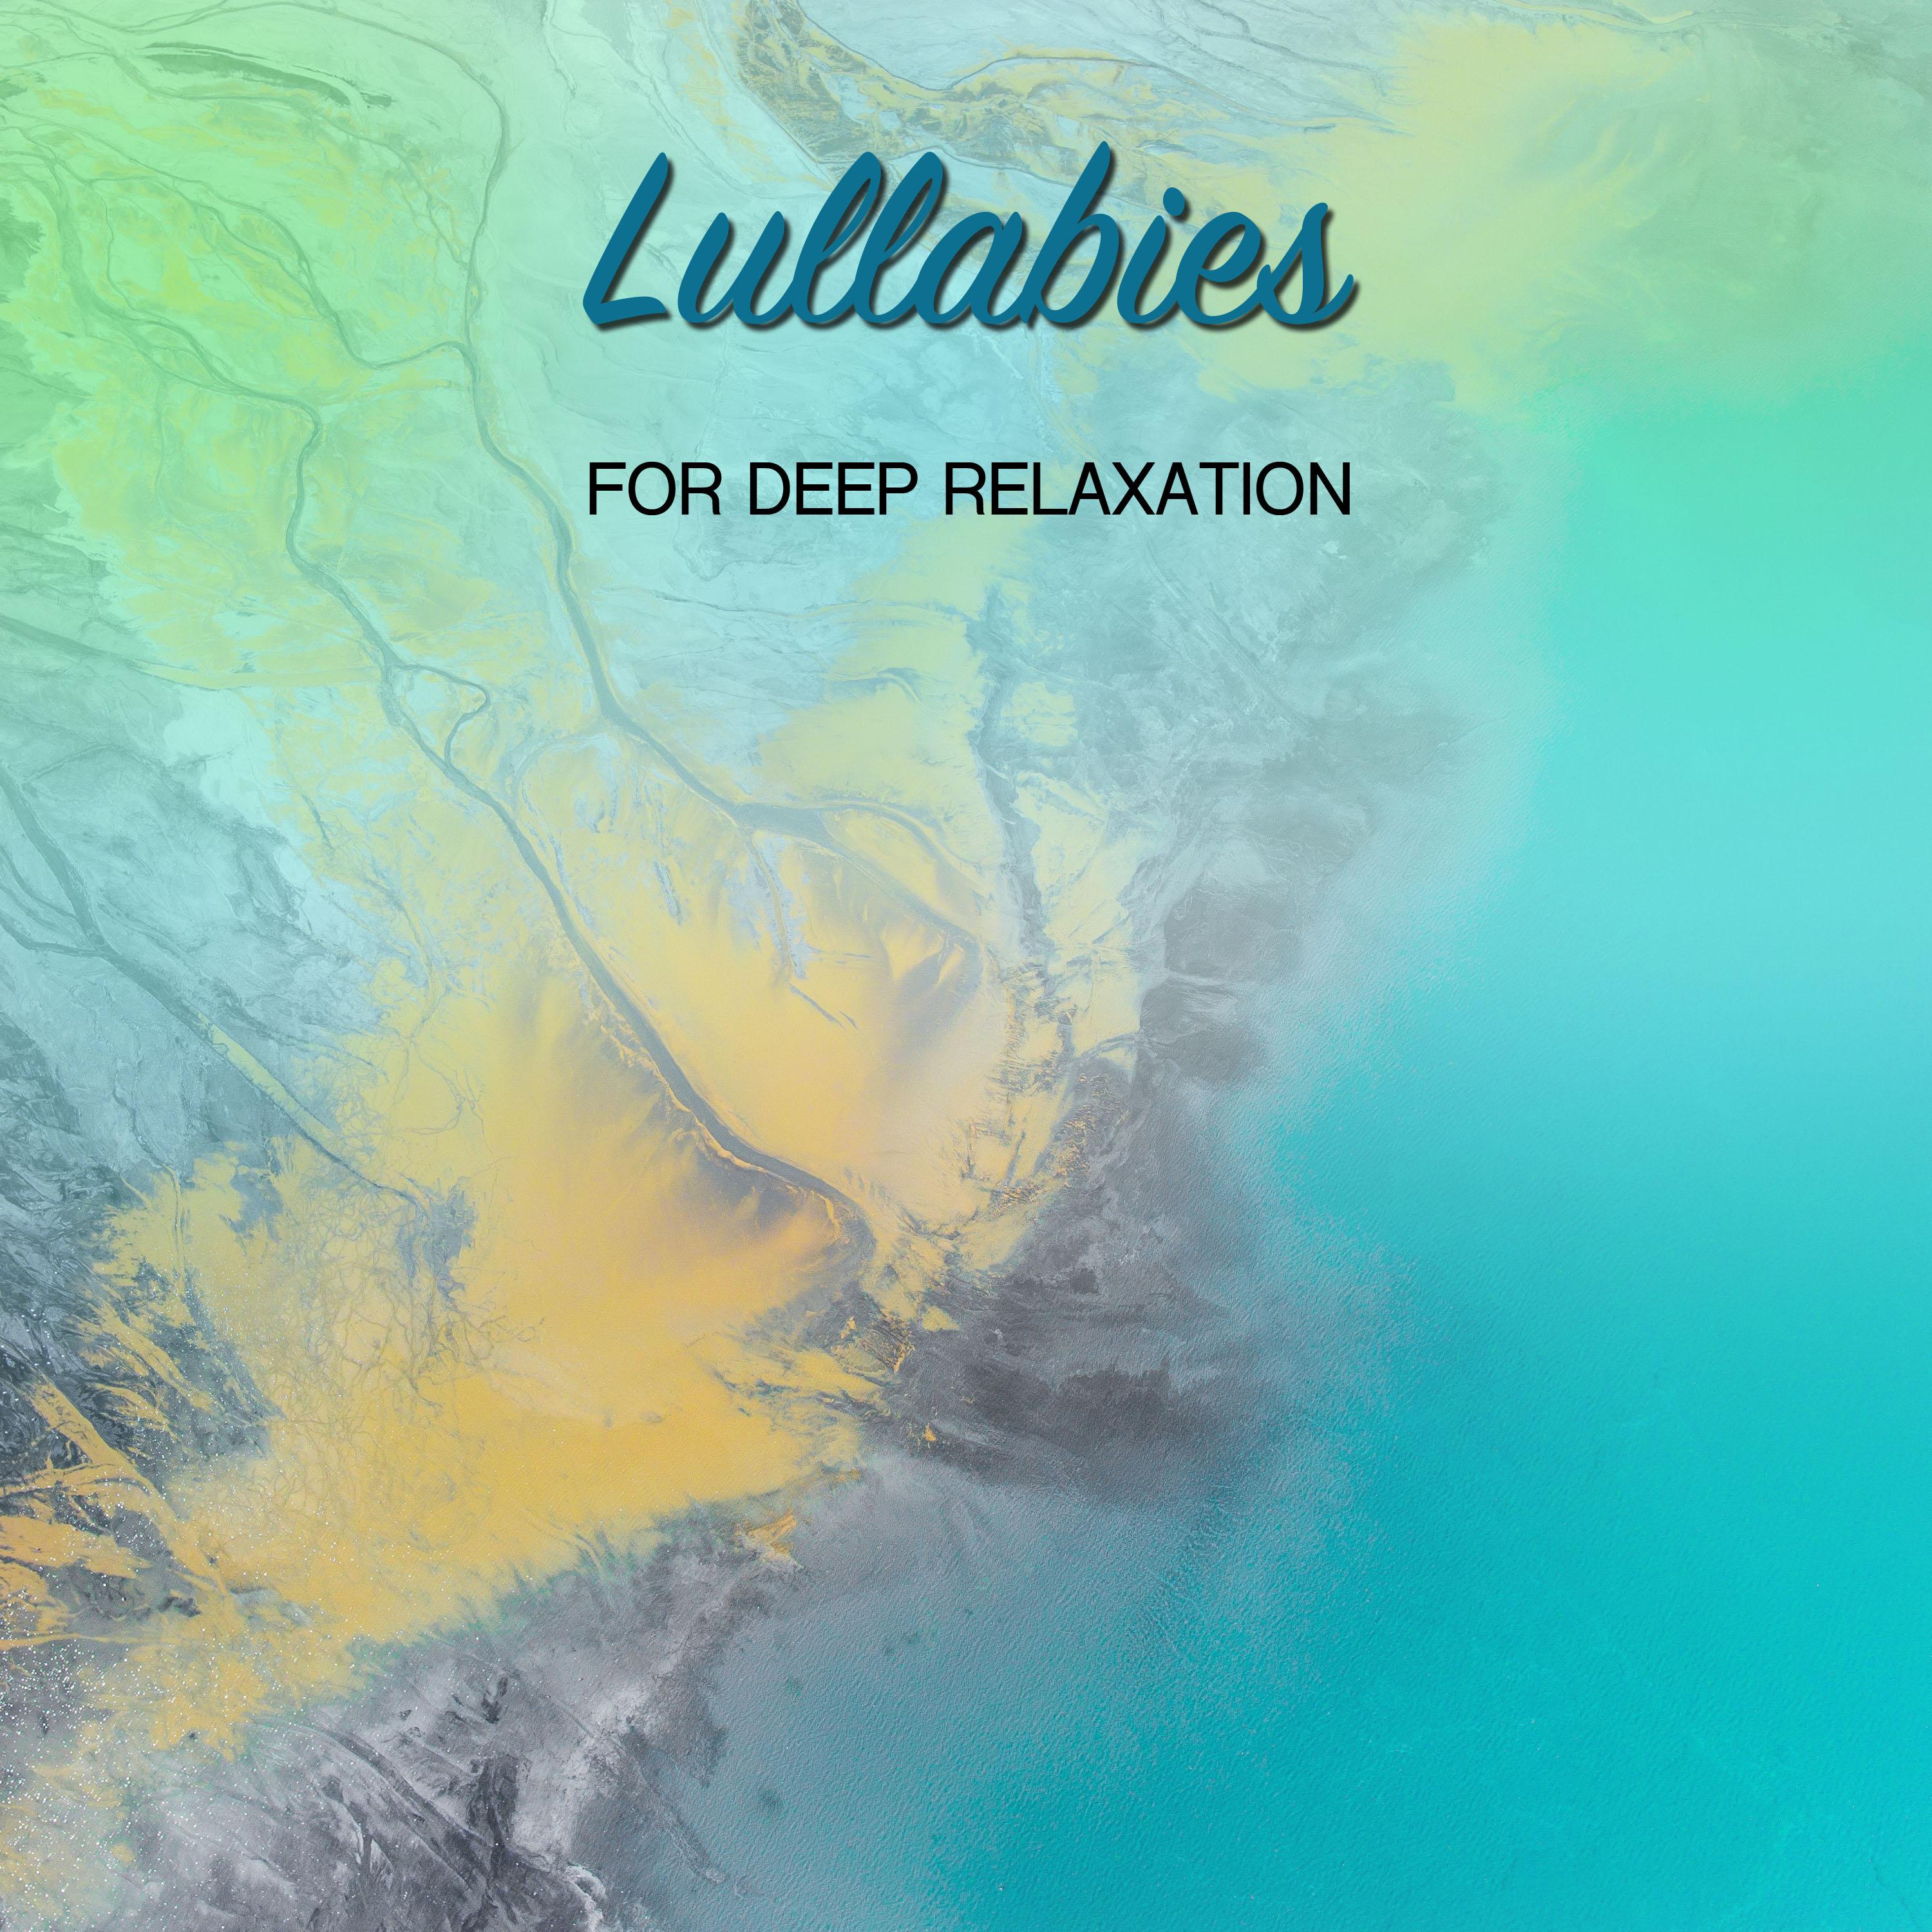 16 Lullabies for Deep Relaxation